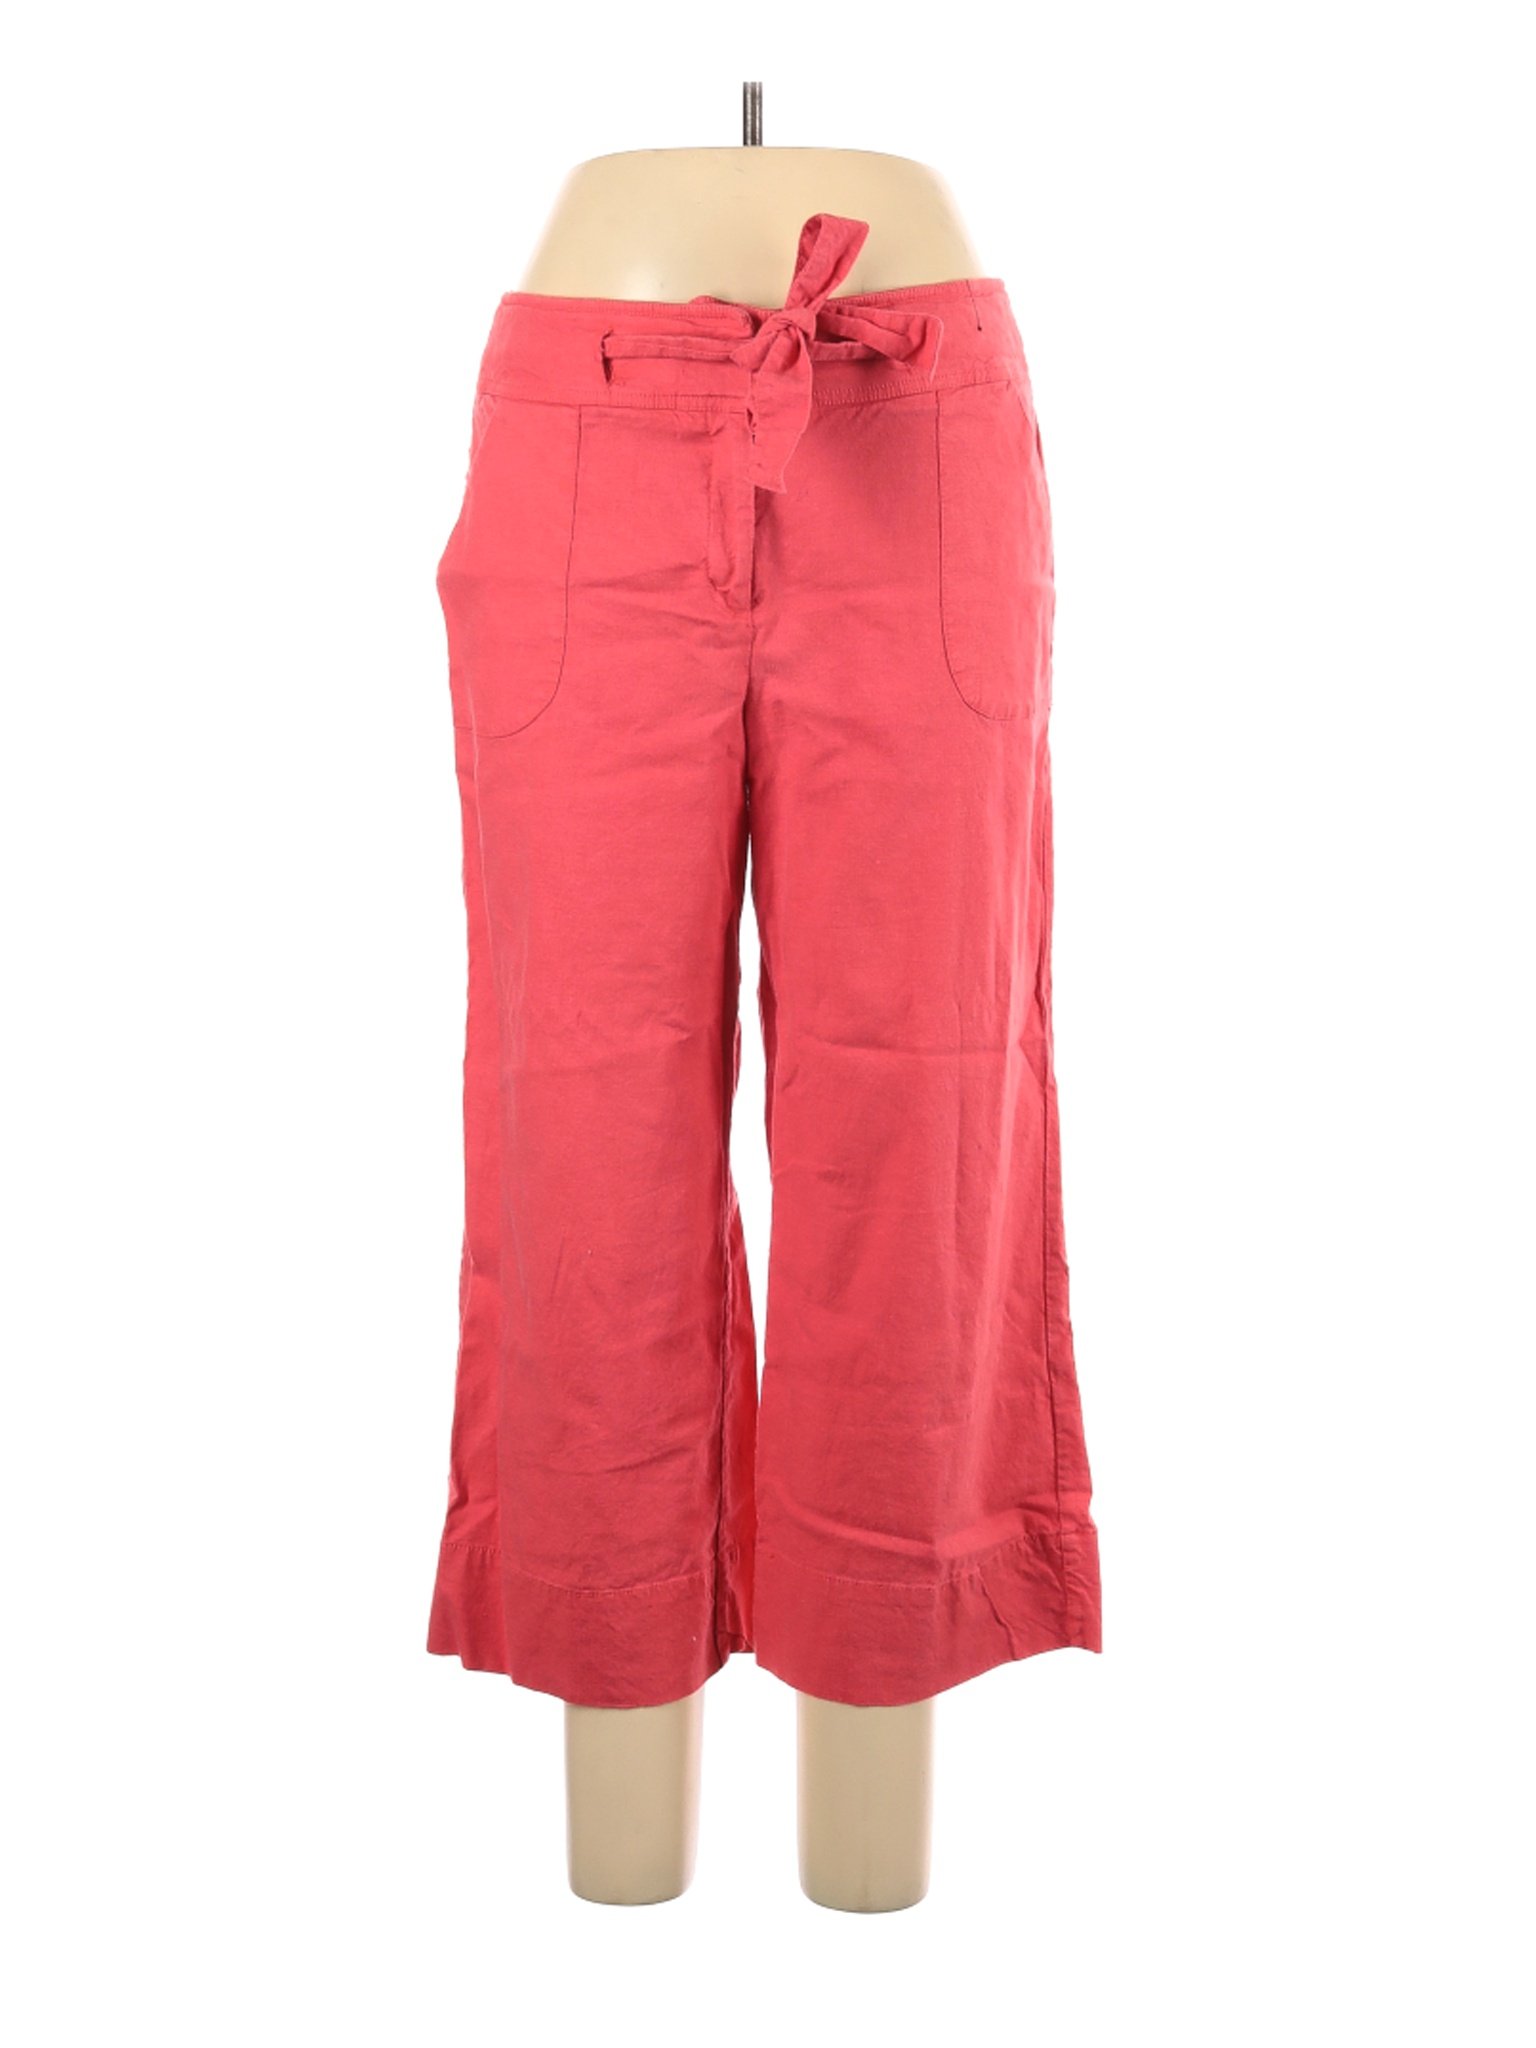 New York & Company Women Pink Linen Pants 12 | eBay